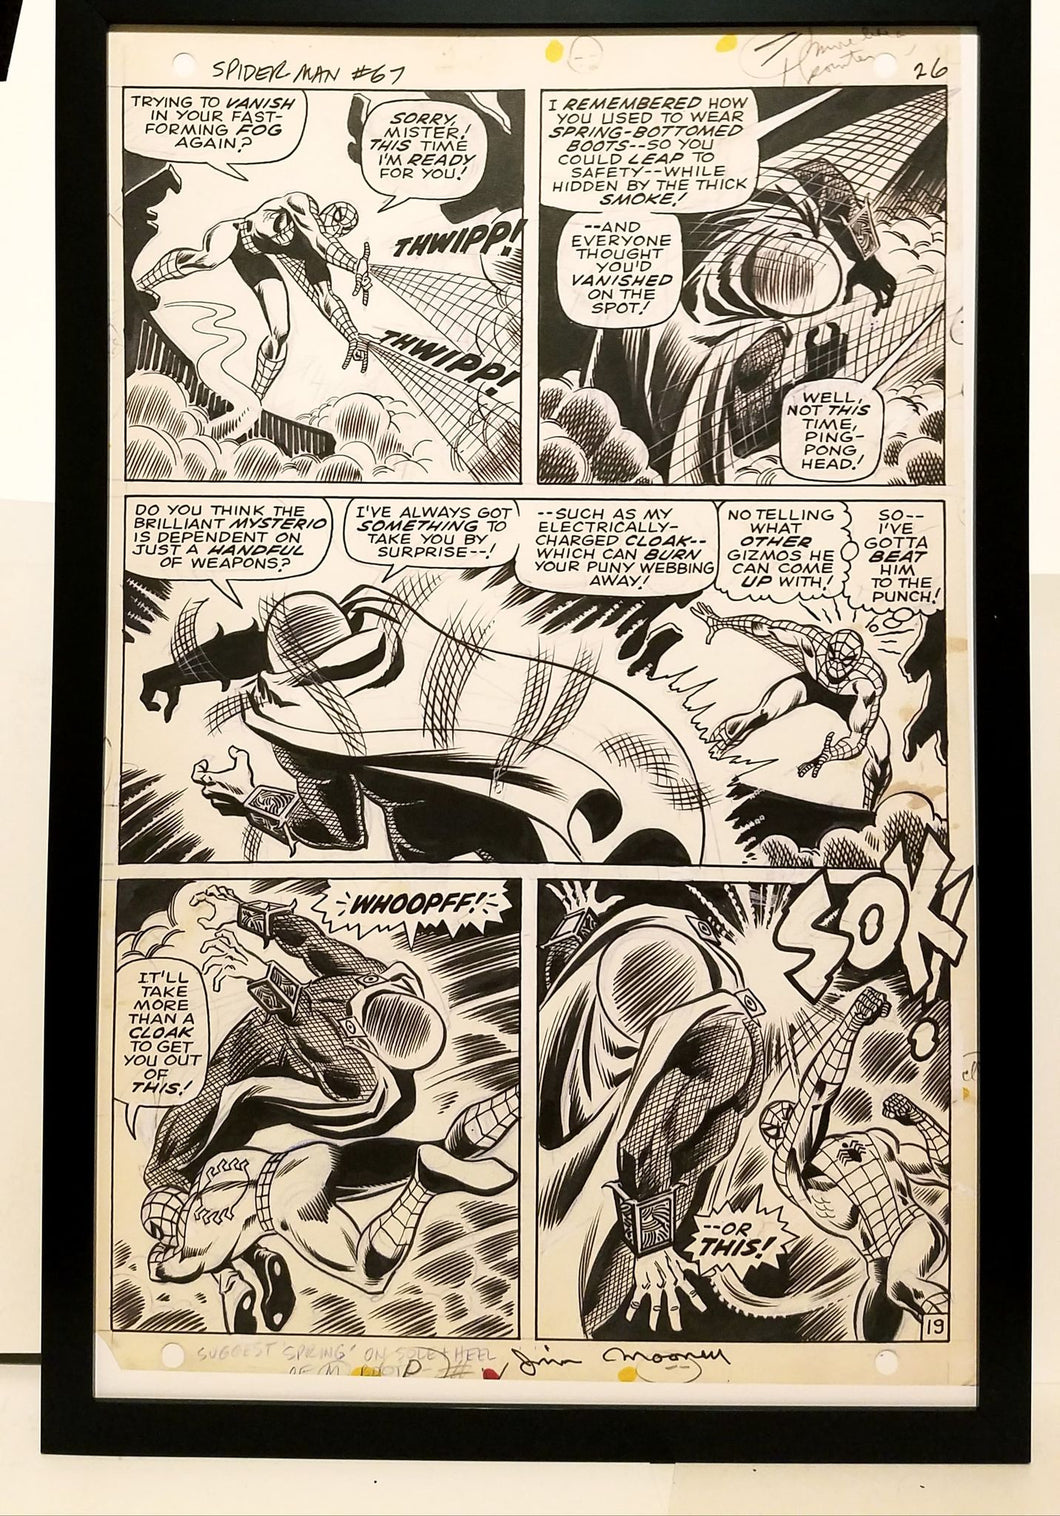 Amazing Spider-Man #67 pg. 19 John Romita 11x17 FRAMED Original Art Poster Marvel Comics